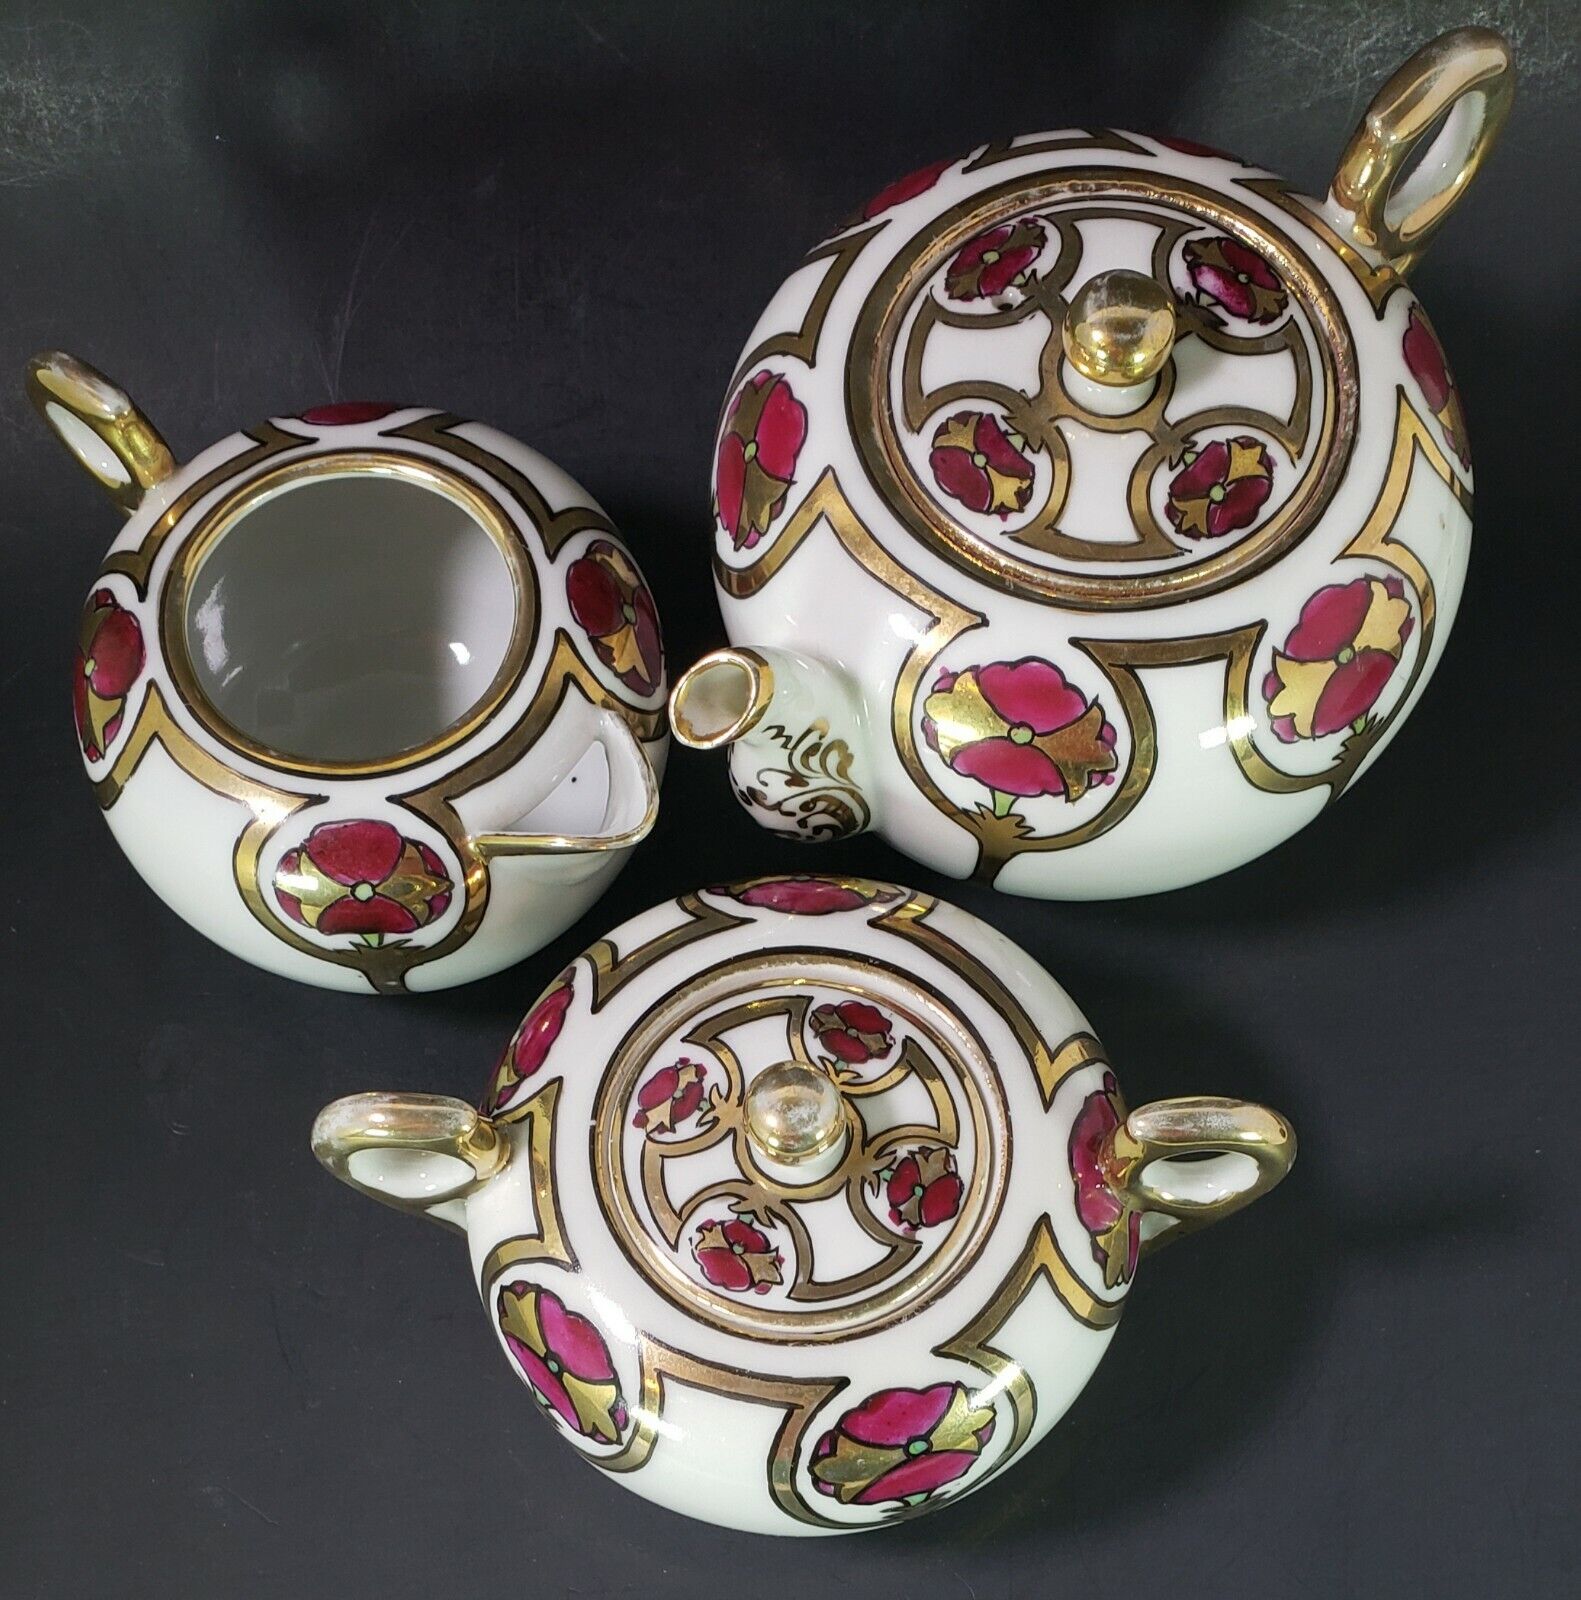 Japan Ceramic Gold Gilded Teapot Sugar Bowl, Creamer, Hand Painted 5 pc Vintage 